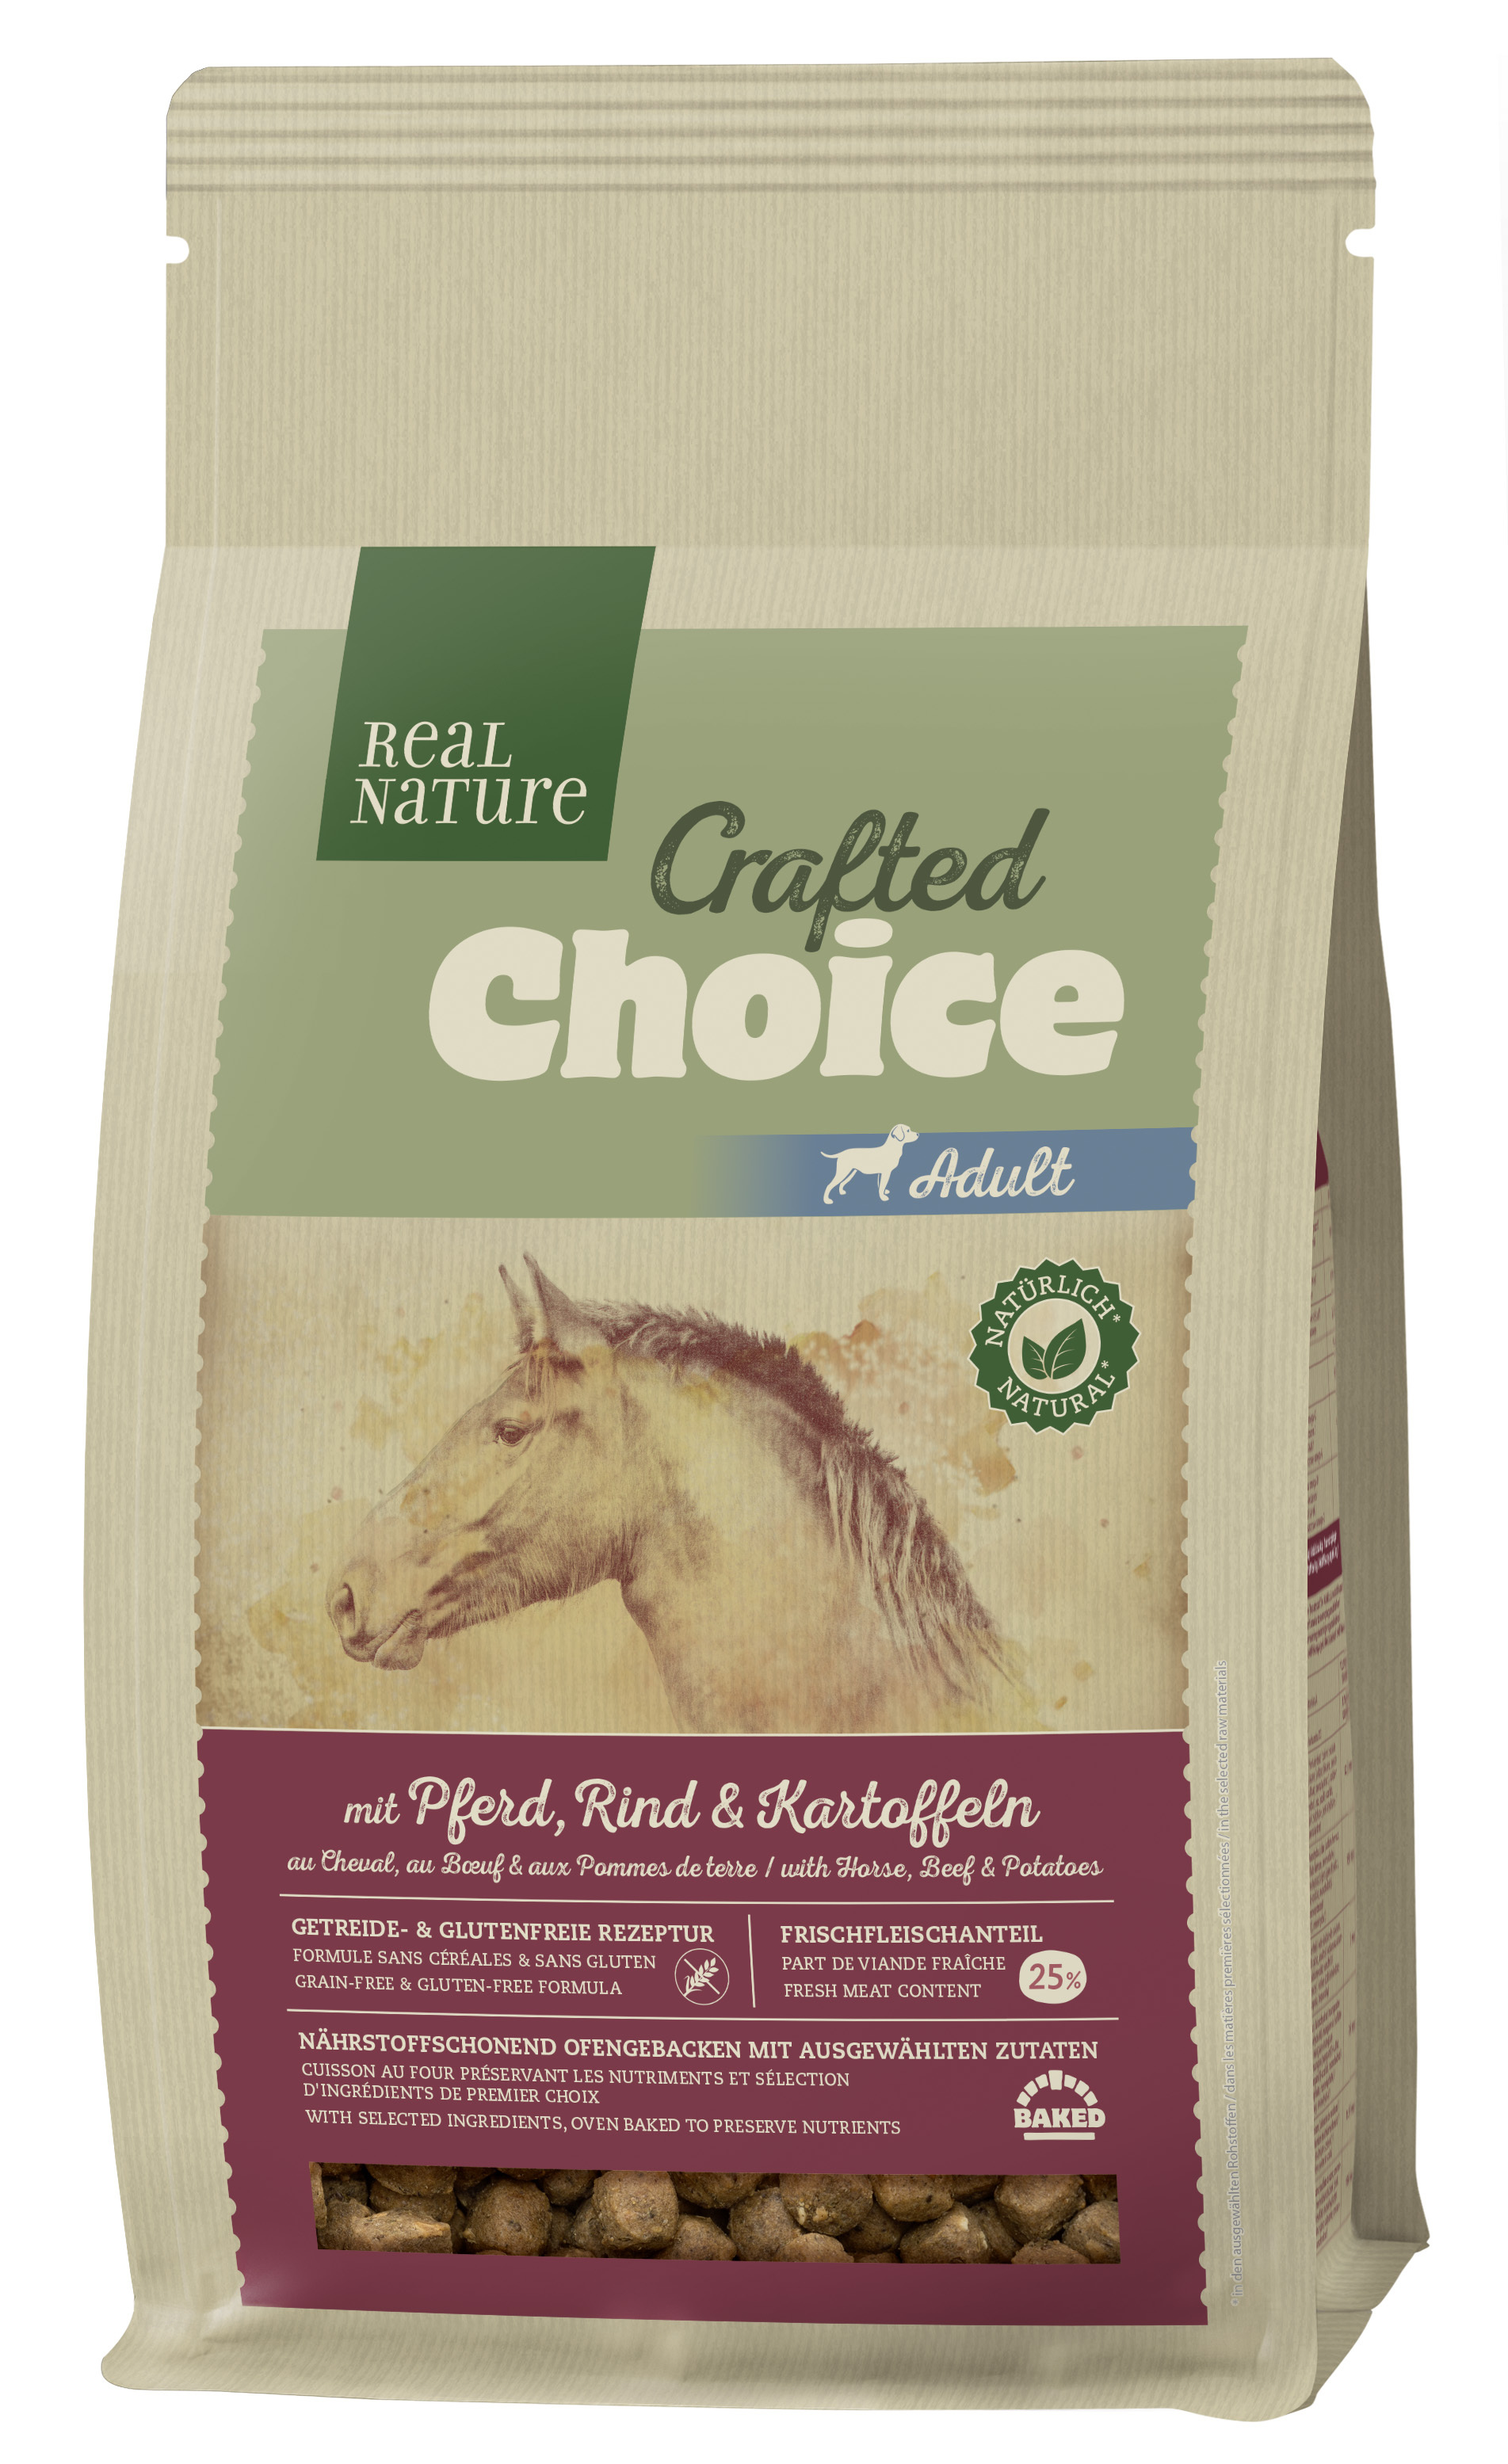 REAL NATURE Crafted Choice Pferd, Rind & Kartoffel gebacken 1kg